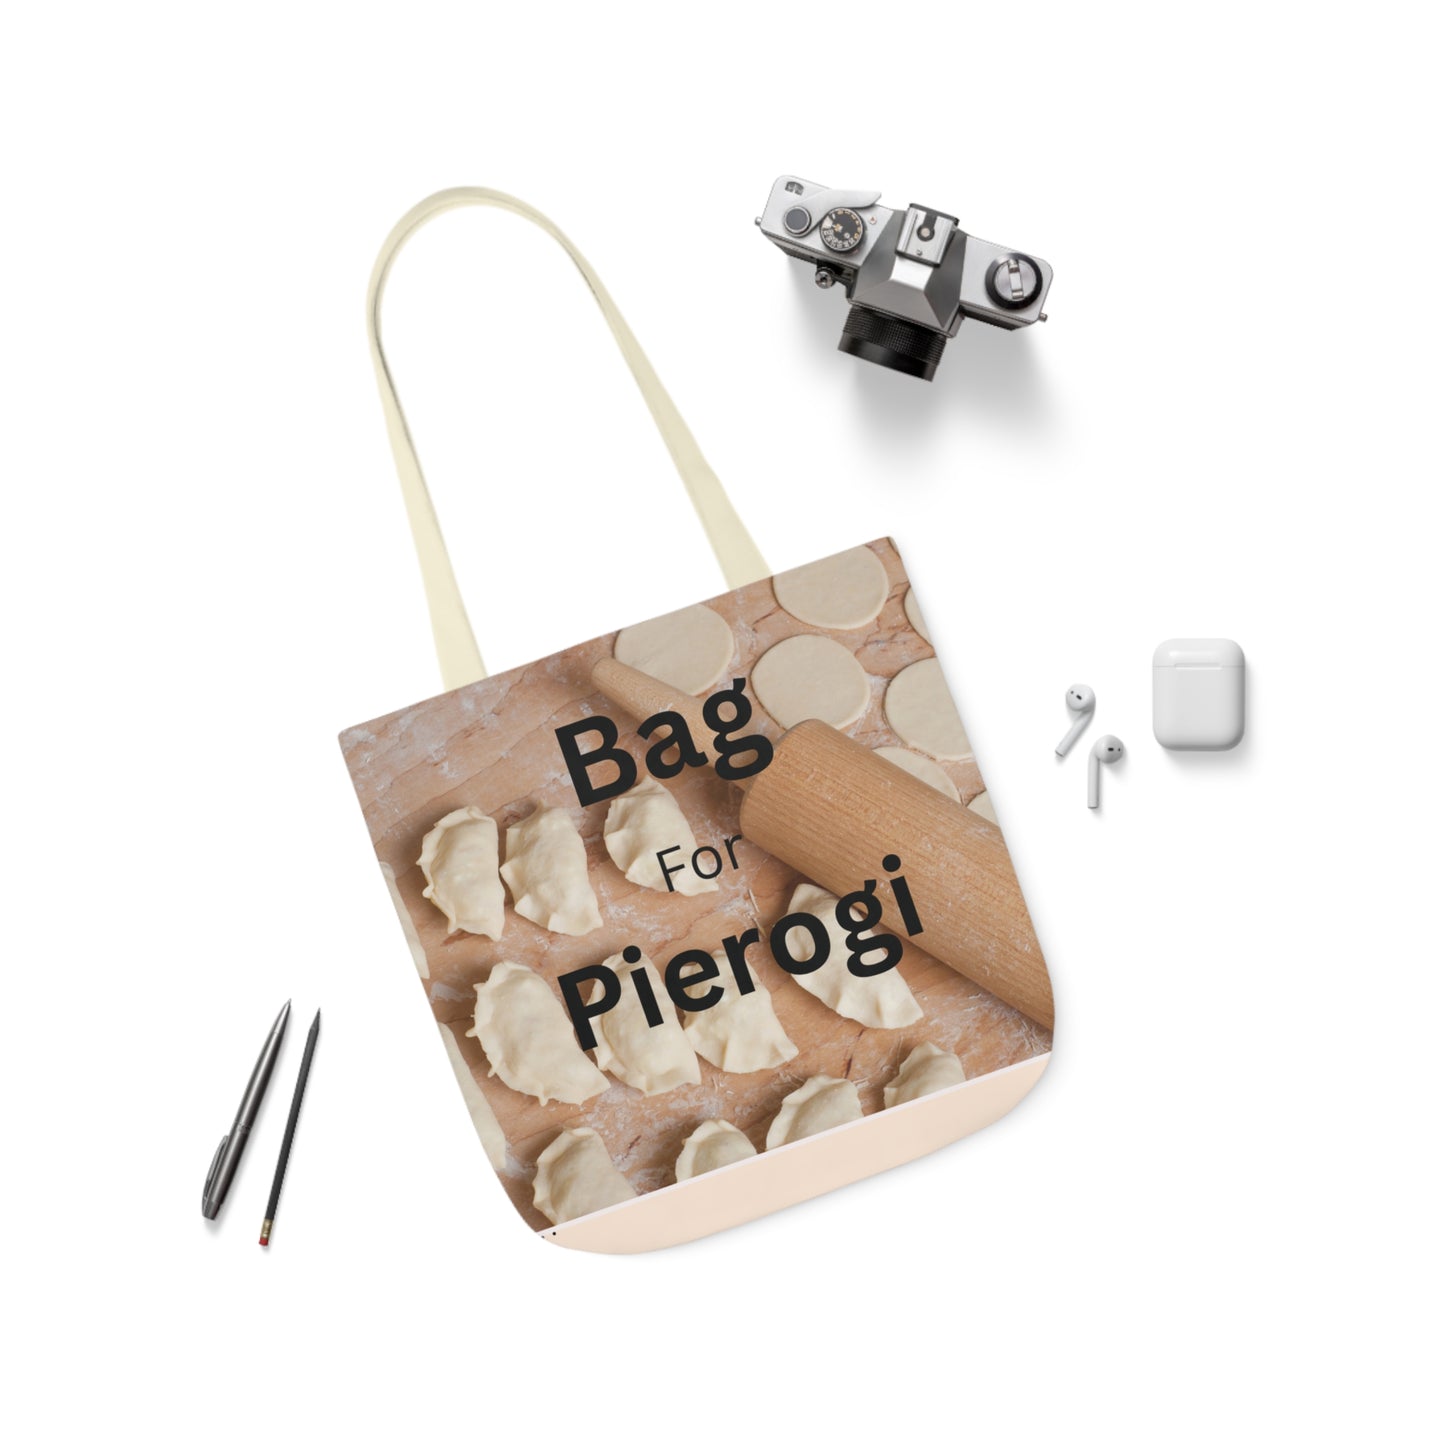 Polyester Canvas Tote Bag "Bag For Pierogi"